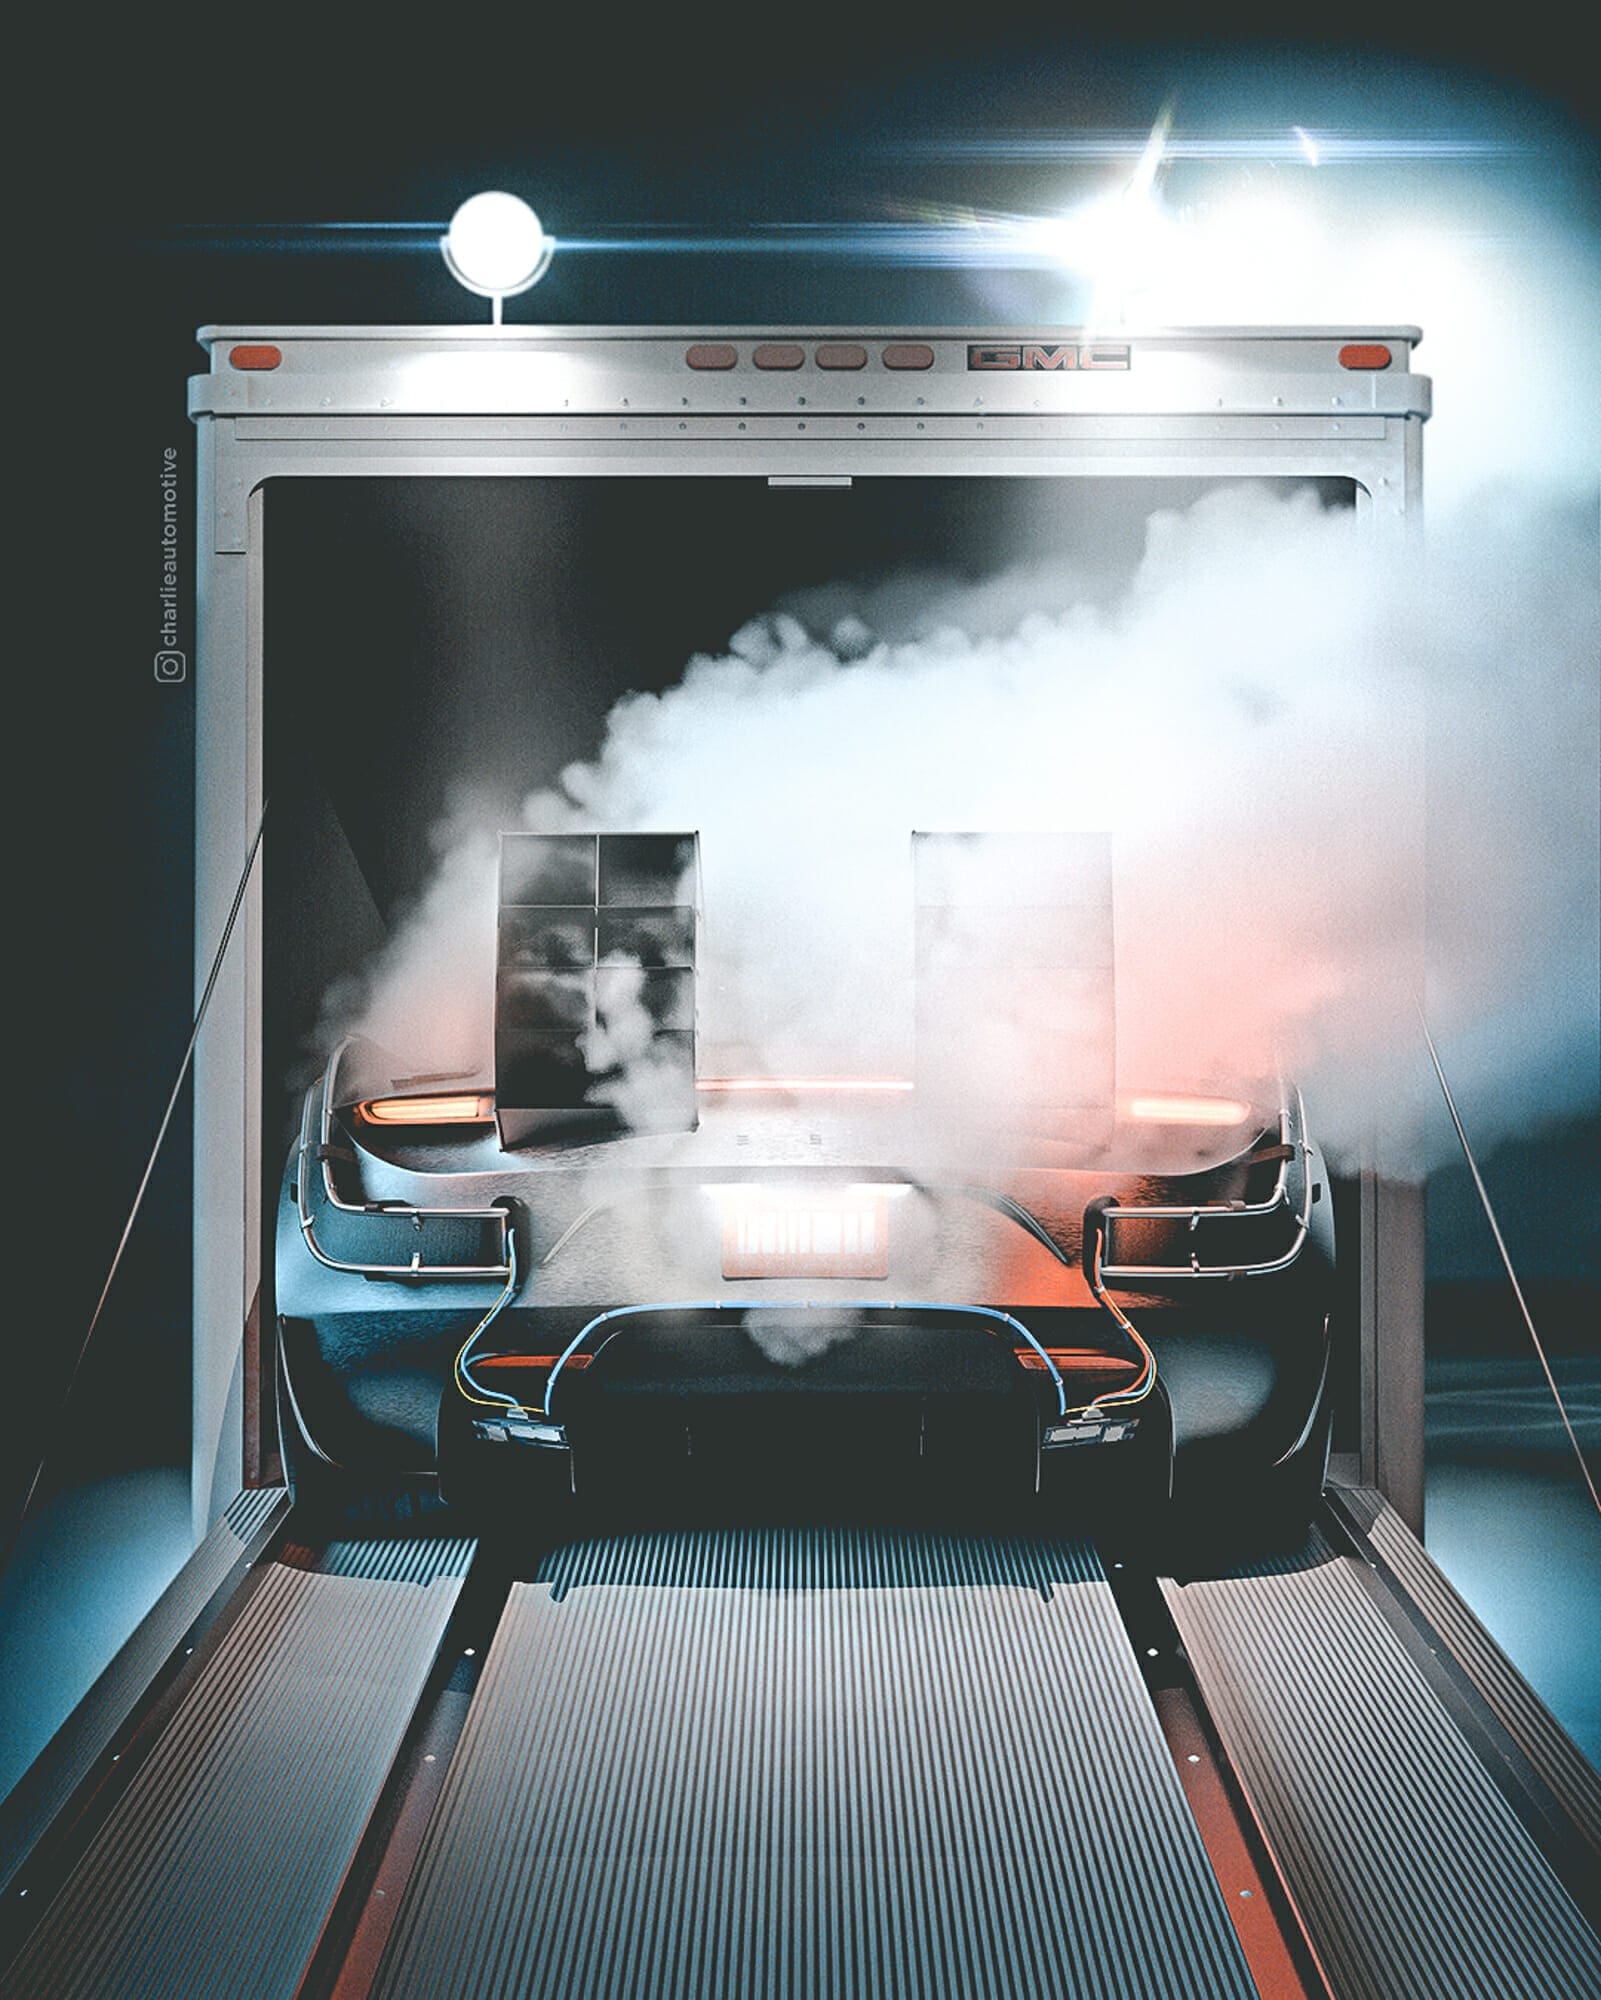 Tesla future, Tesla Roadster: Back to the Future